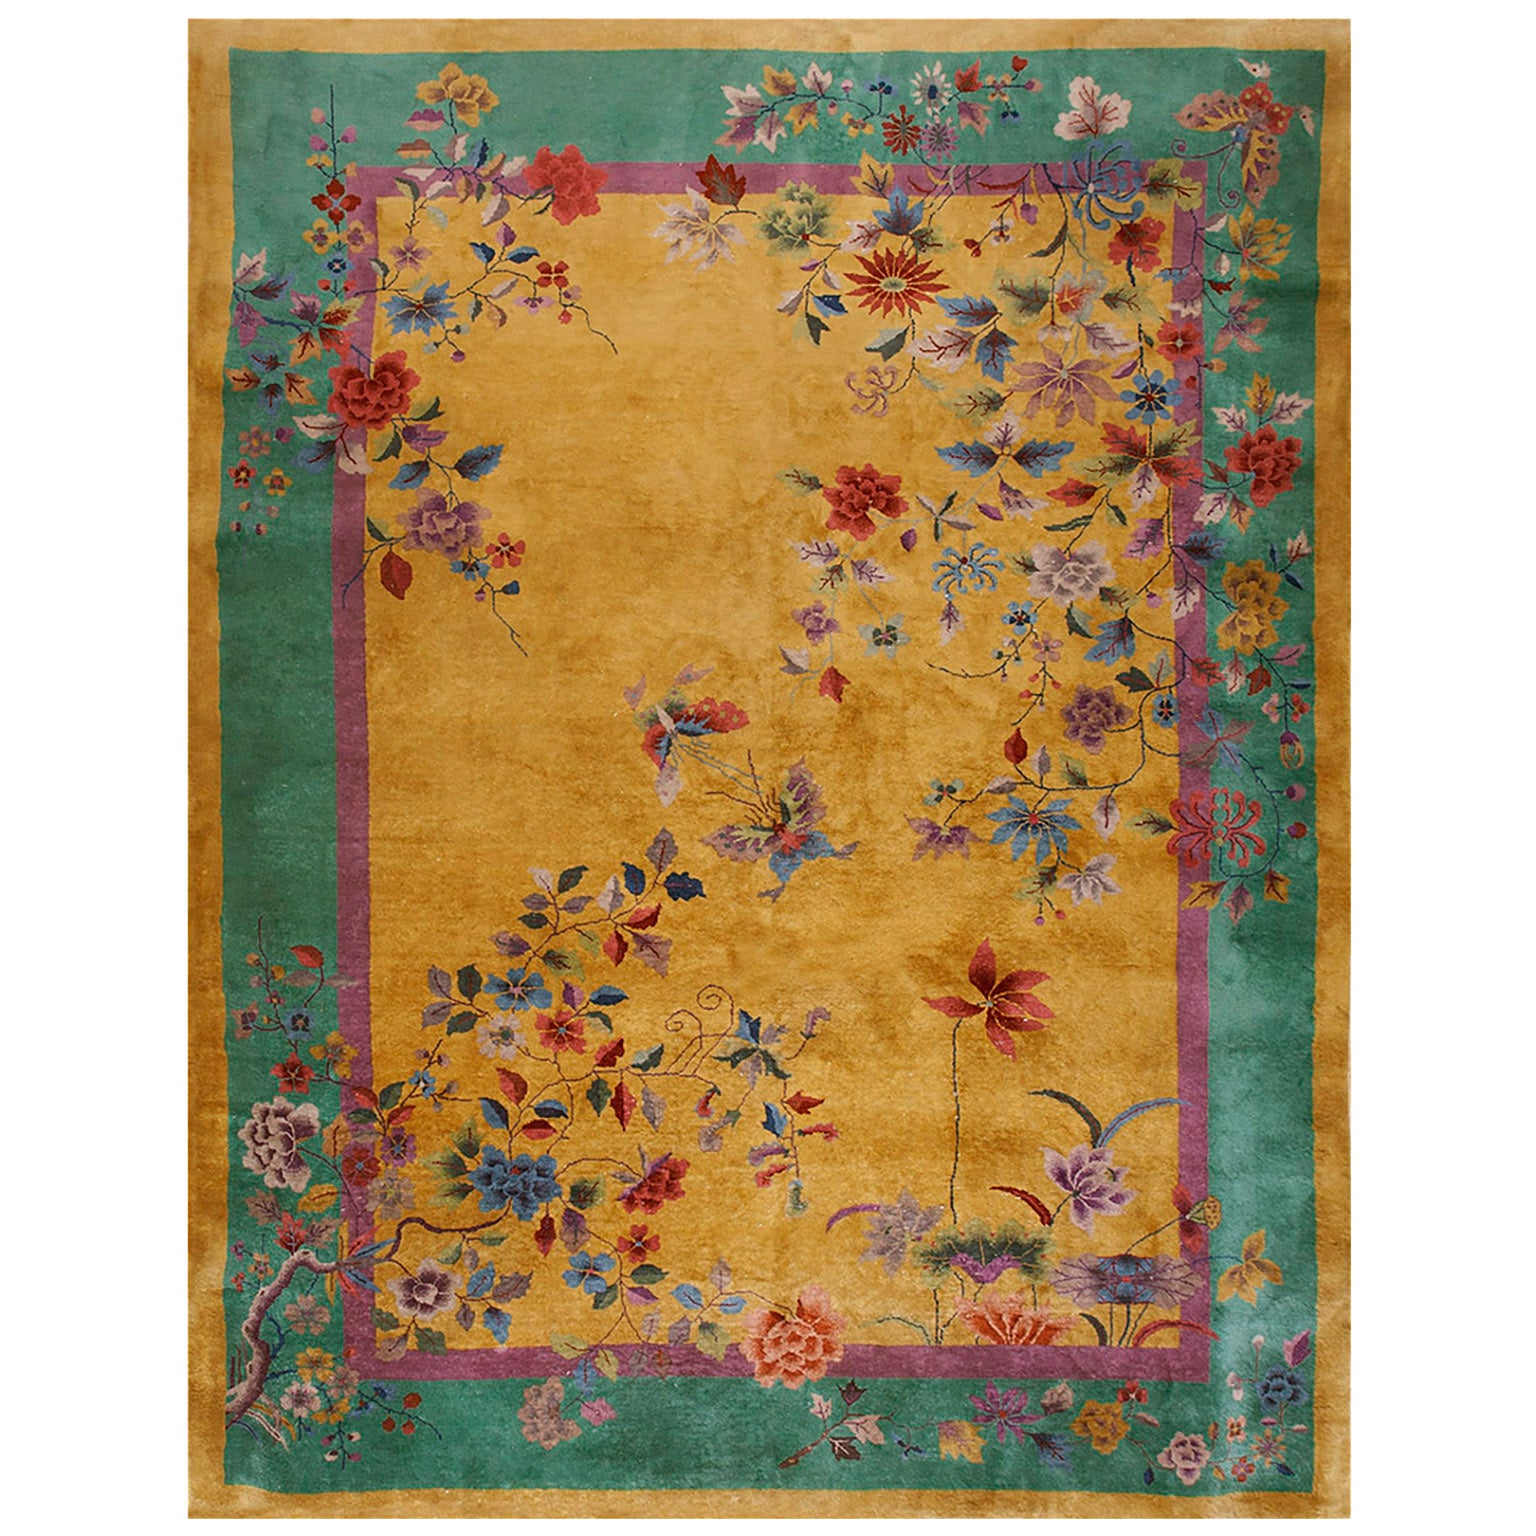 1920s Chinese Art Deco Carpet by Nichols Workshop ( 9'8" x 11' 6" - 295 x 350 )